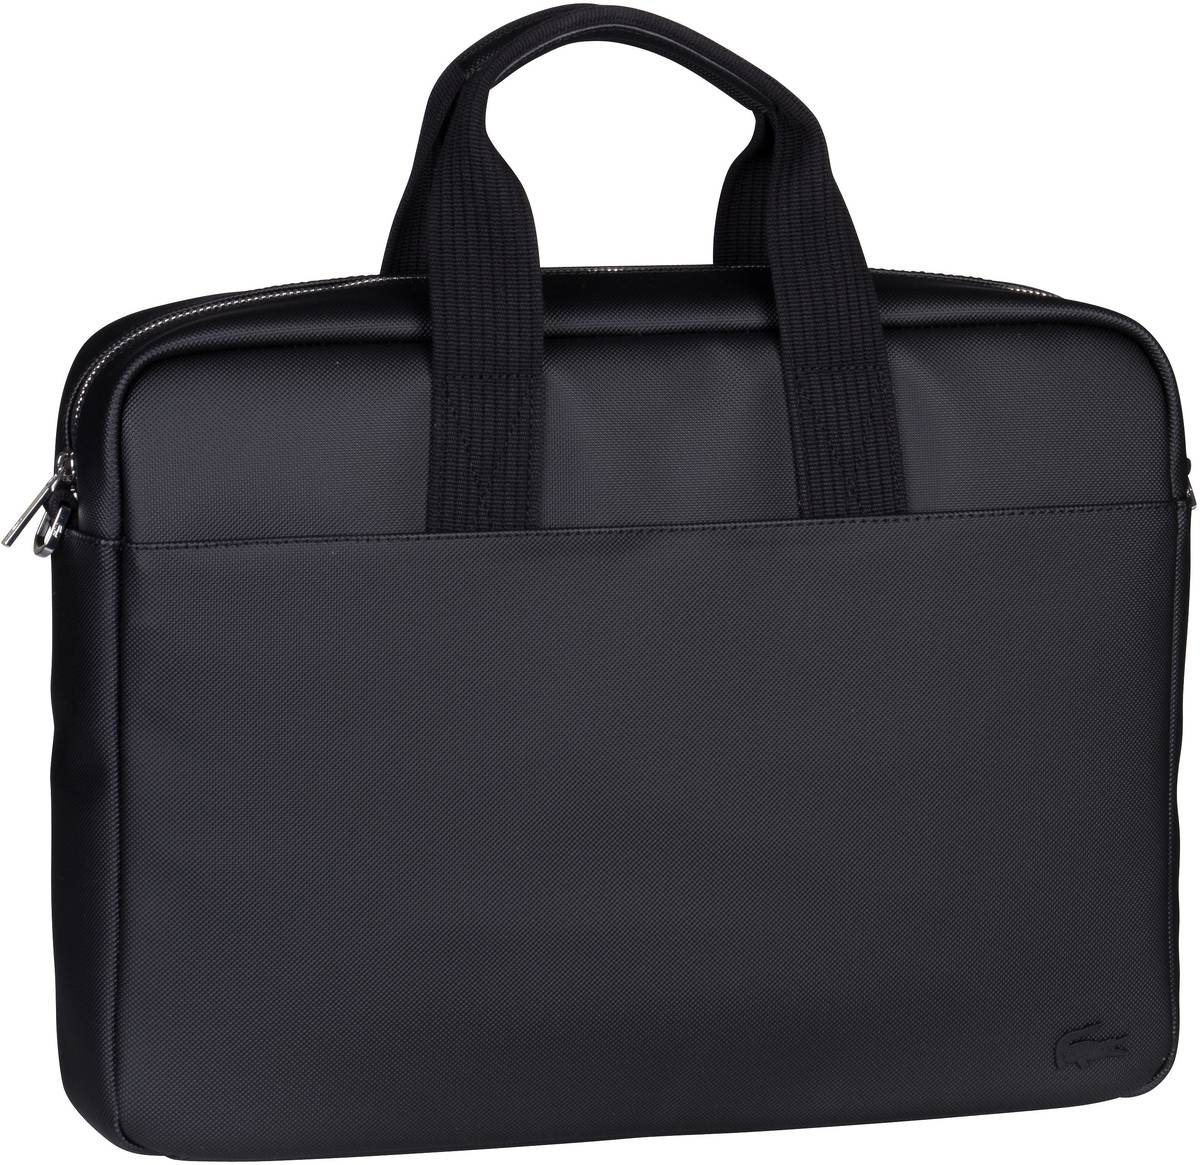 Lacoste Computer Bag 2451 - Black